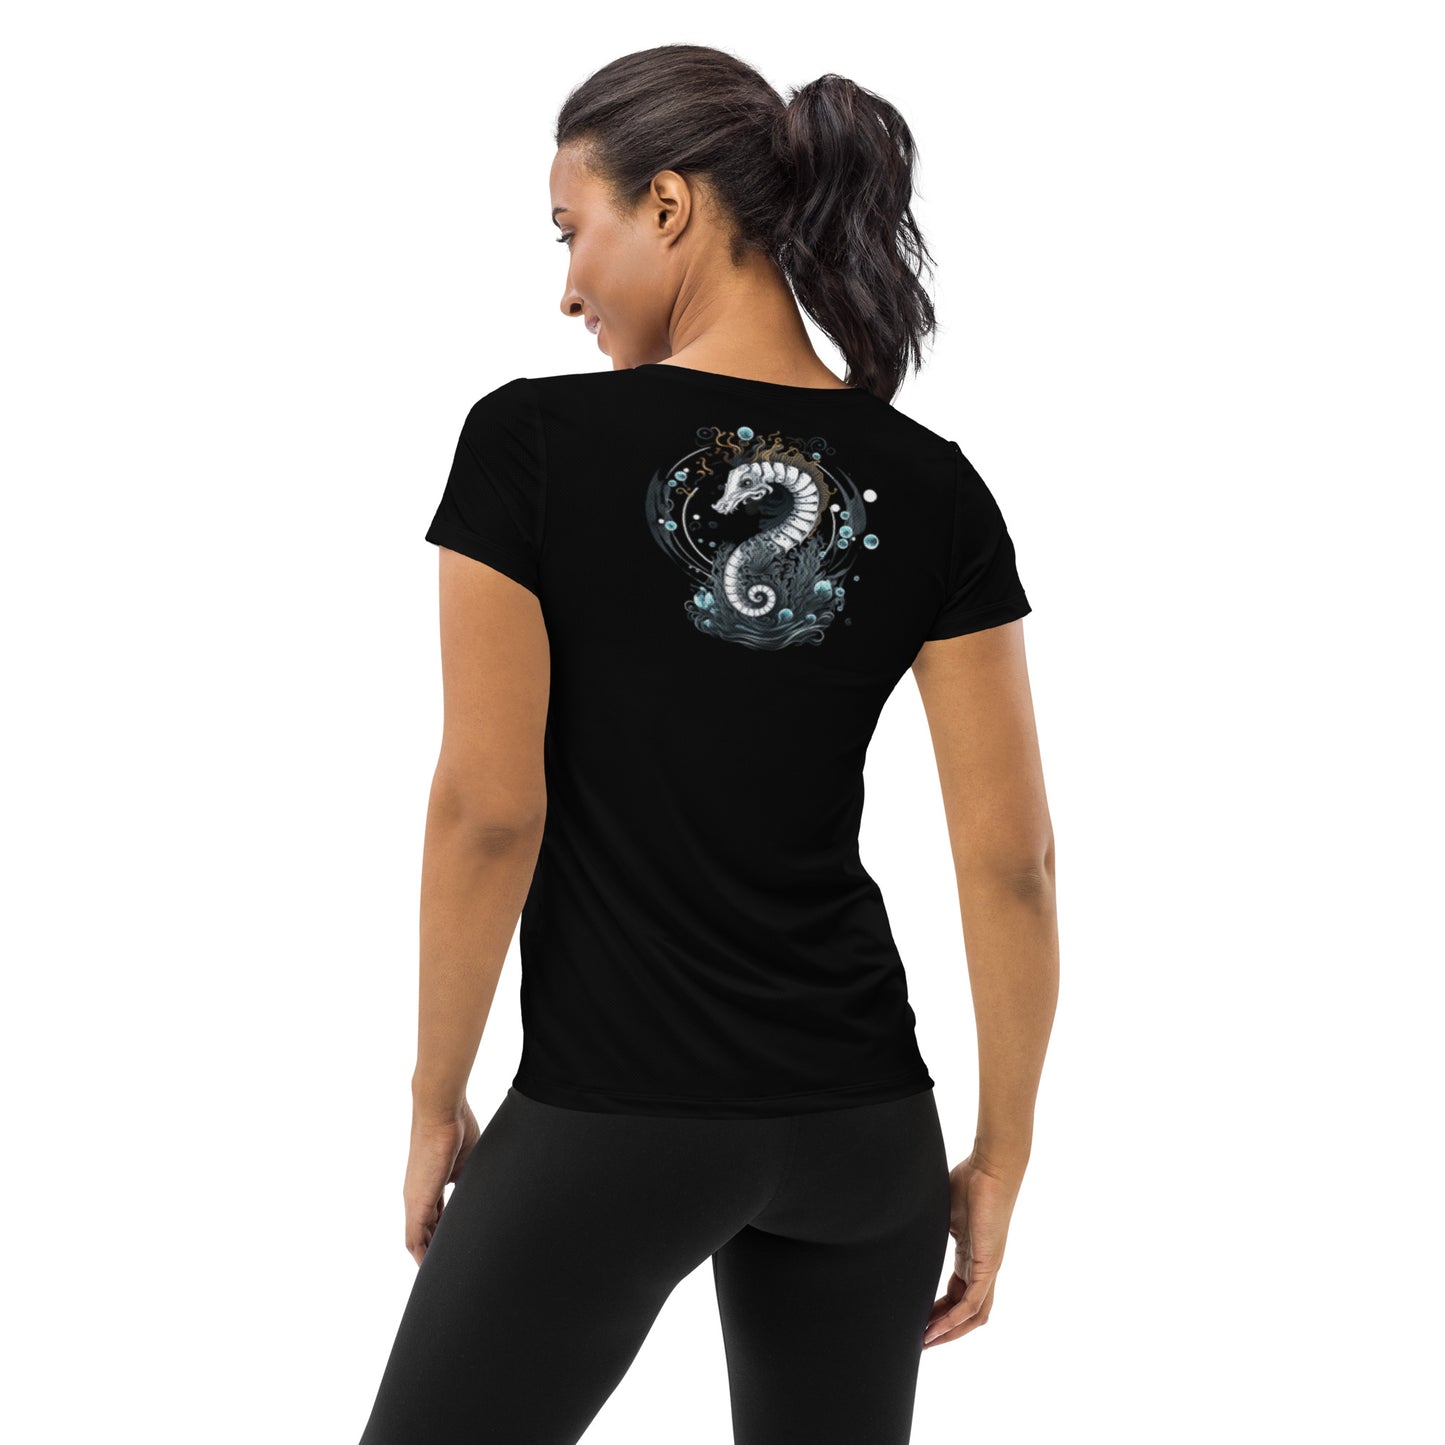 Stoic Seahorse Women's Athletic T-shirt